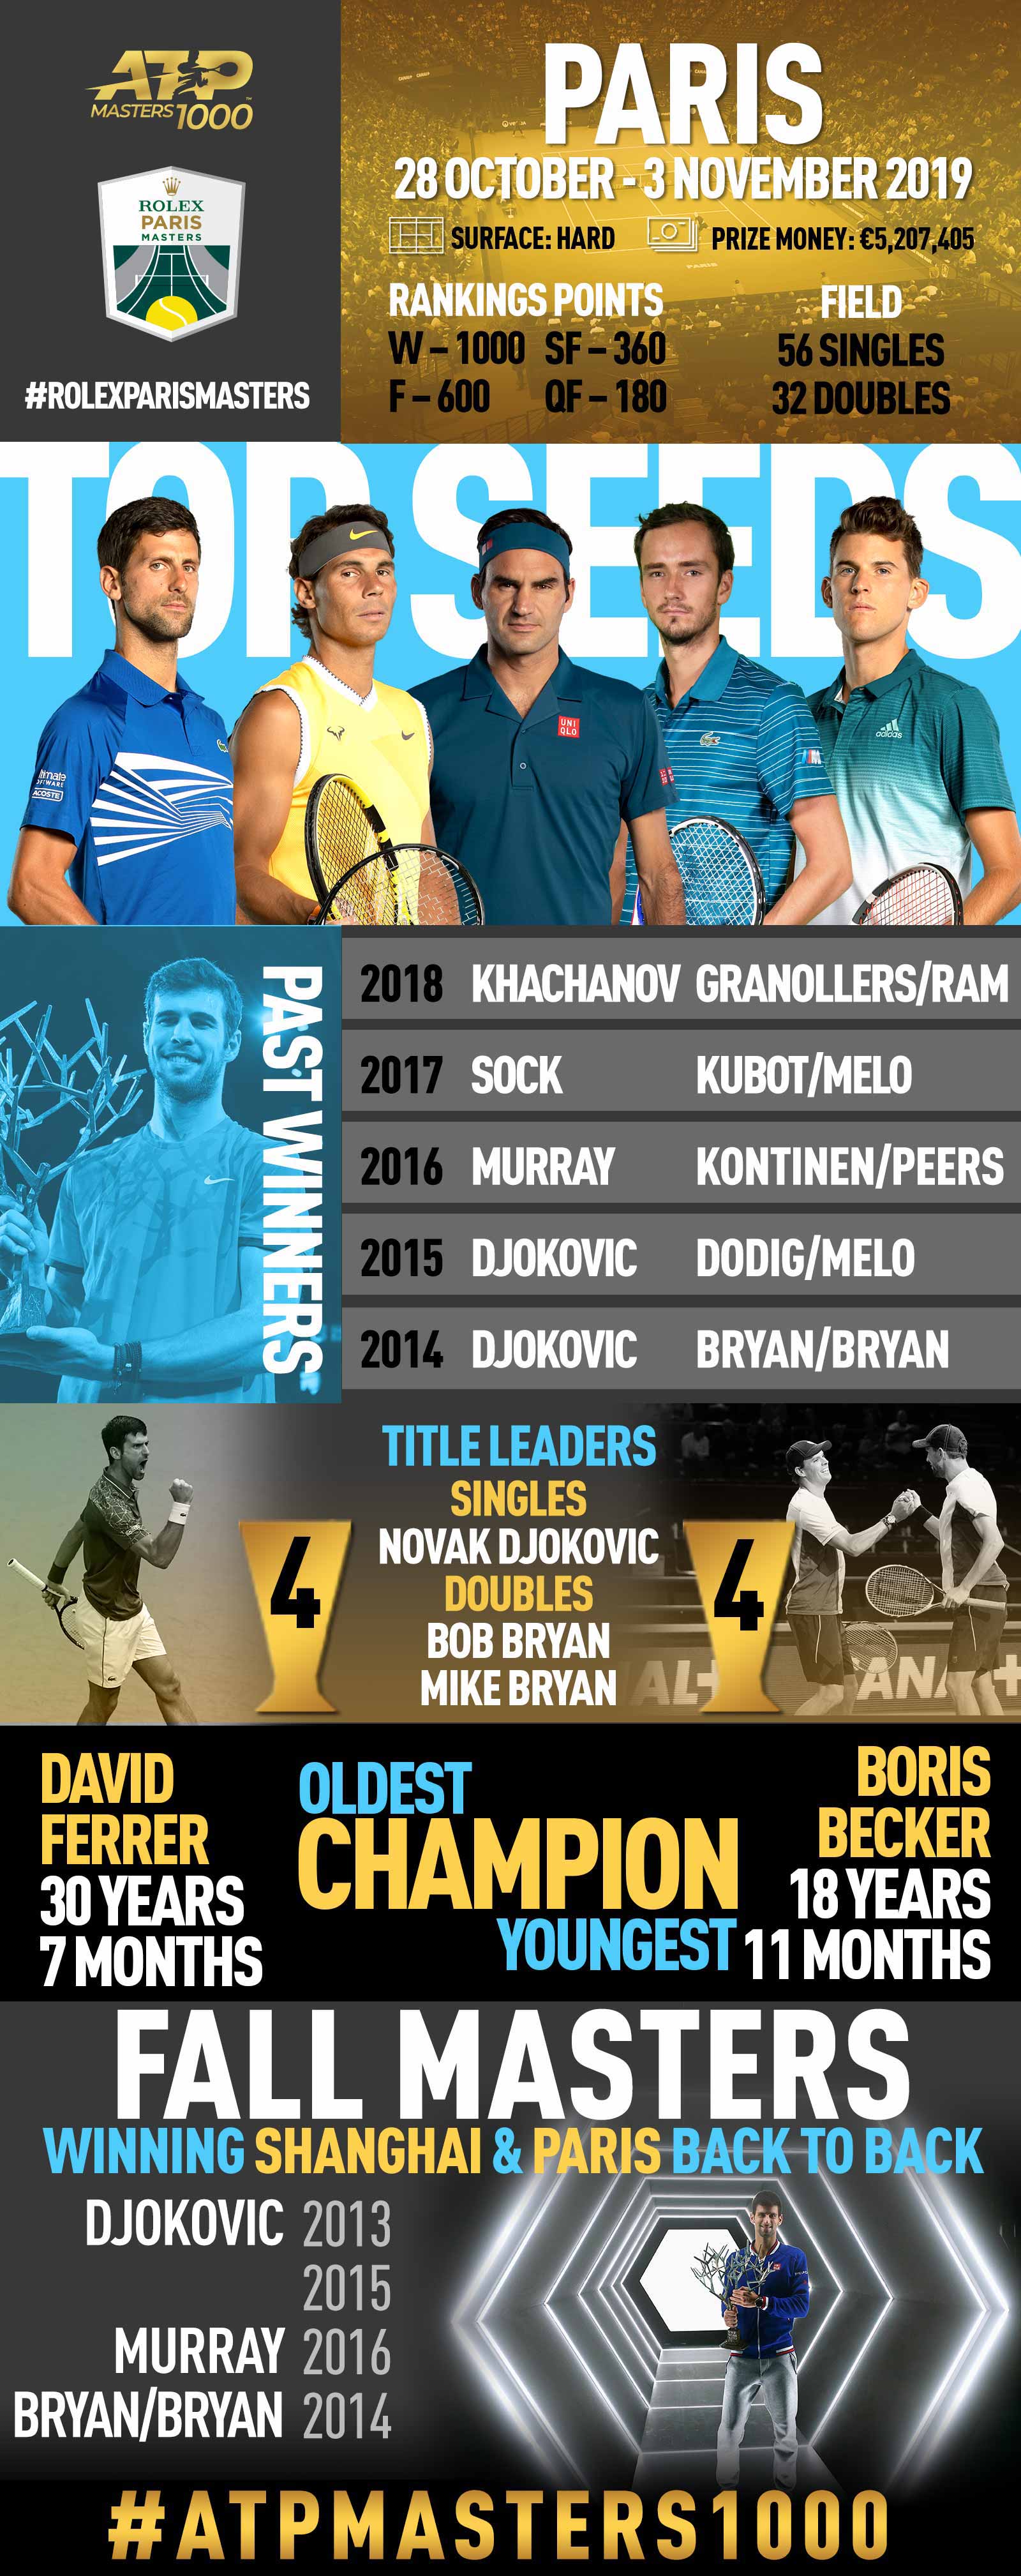 2019 <a href='https://www.atptour.com/en/tournaments/paris/352/overview'>Rolex Paris Masters</a> | ATP Masters 1000 tennis tournament in France, featuring Djokovic, Nadal, Federer, Medvedev